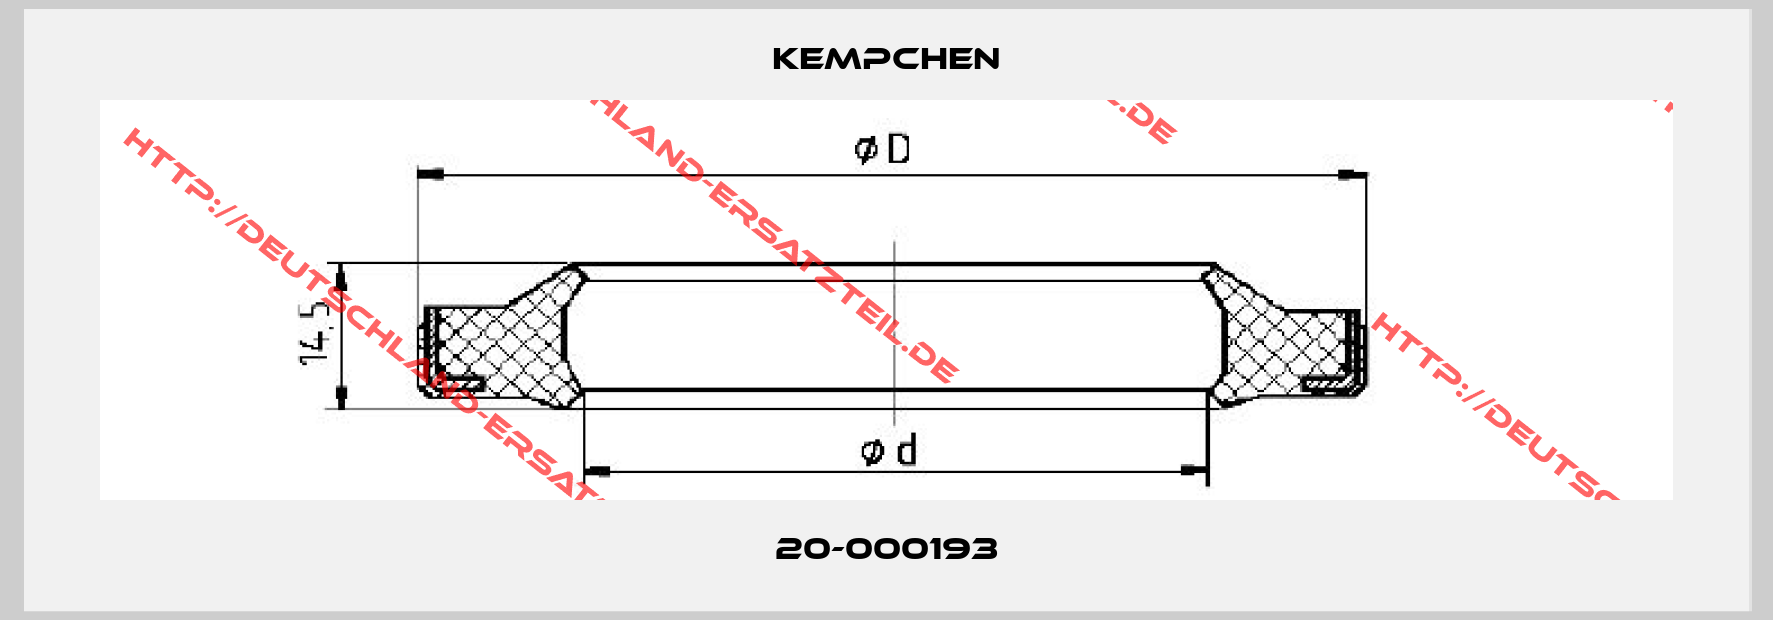 KEMPCHEN-20-000193